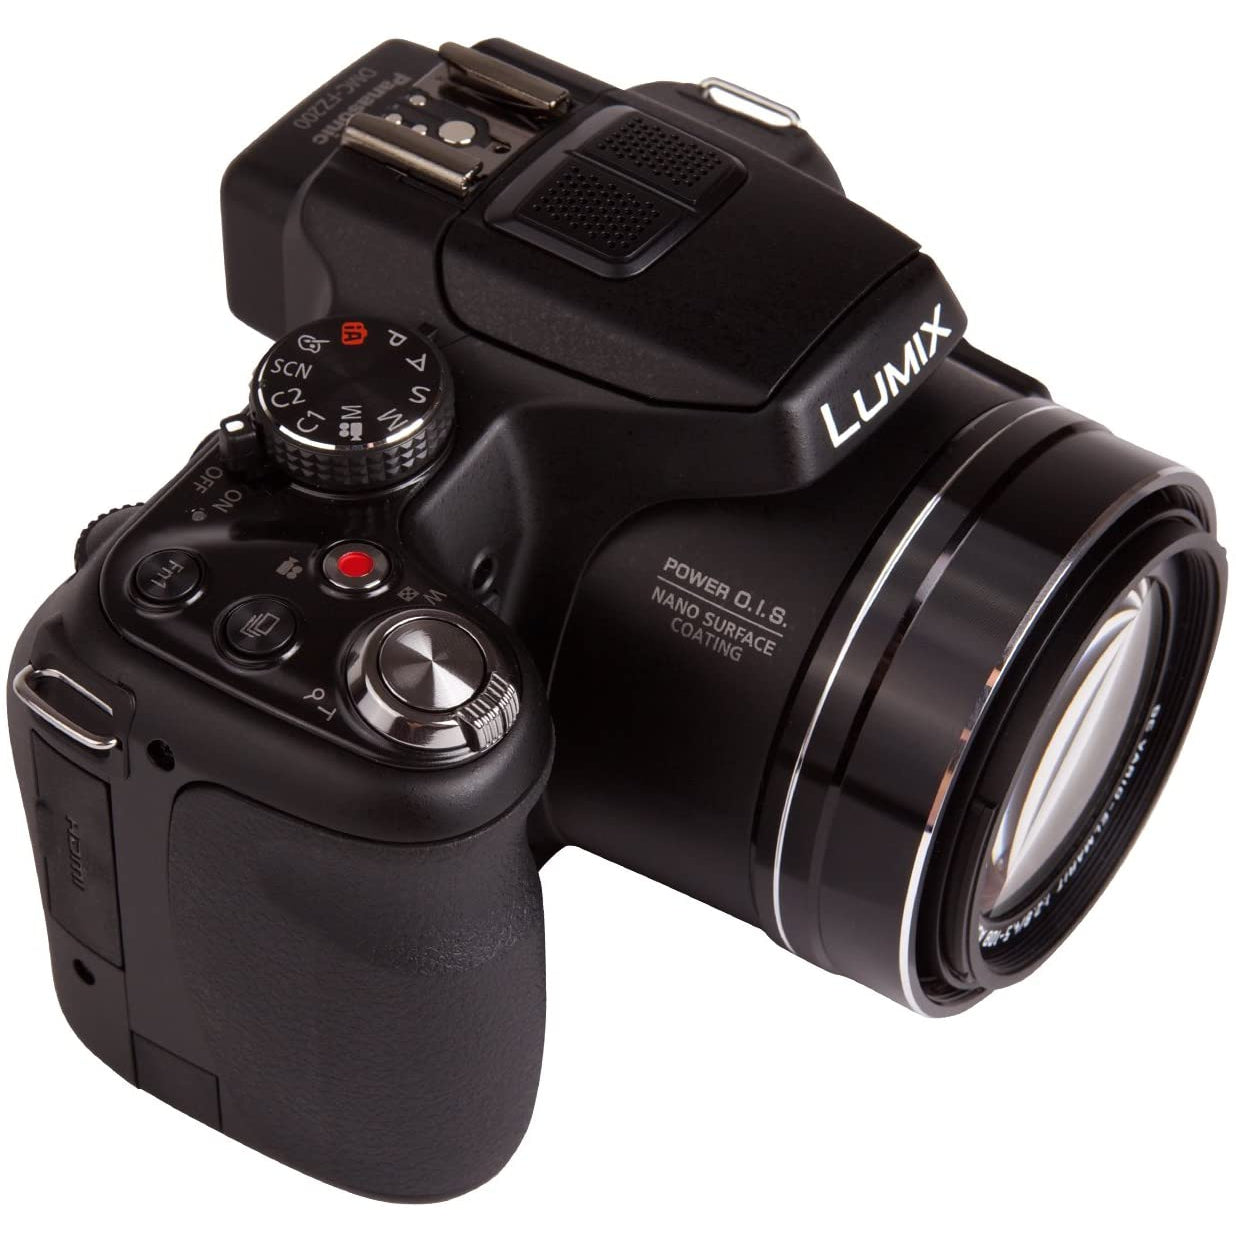 Panasonic Lumix DMC-FZ200 Digital Bridge Camera - Black